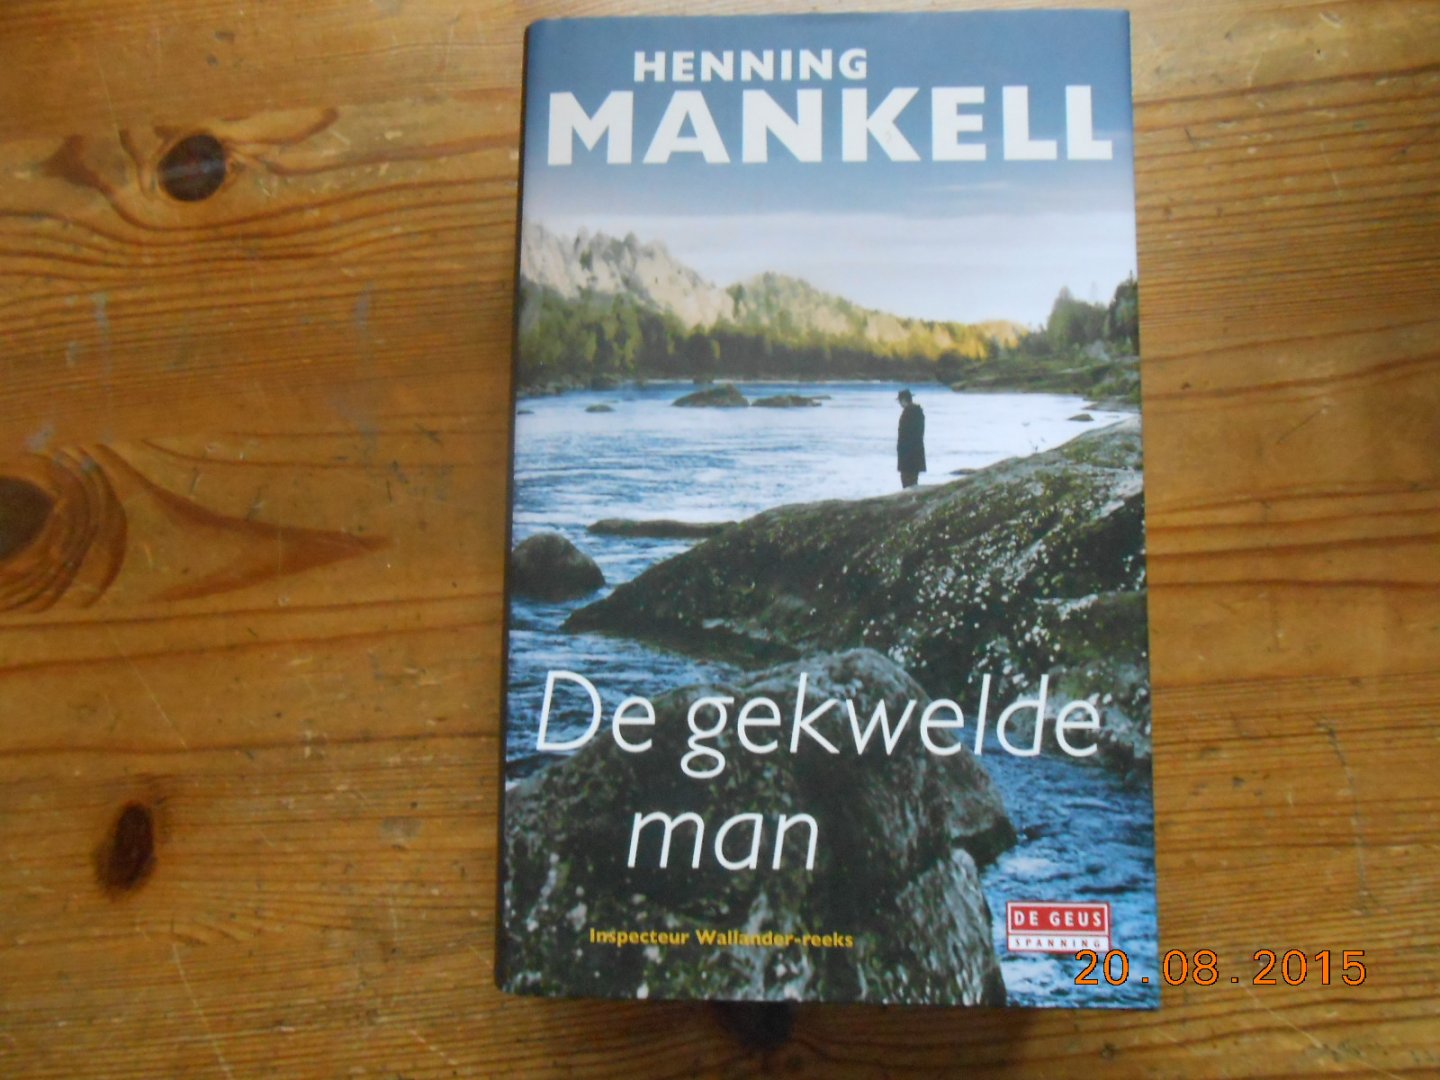 Mankell, Henning - Inspecteur Wallander-reeks De gekwelde man / inspecteur Wallanderreeks deel 10